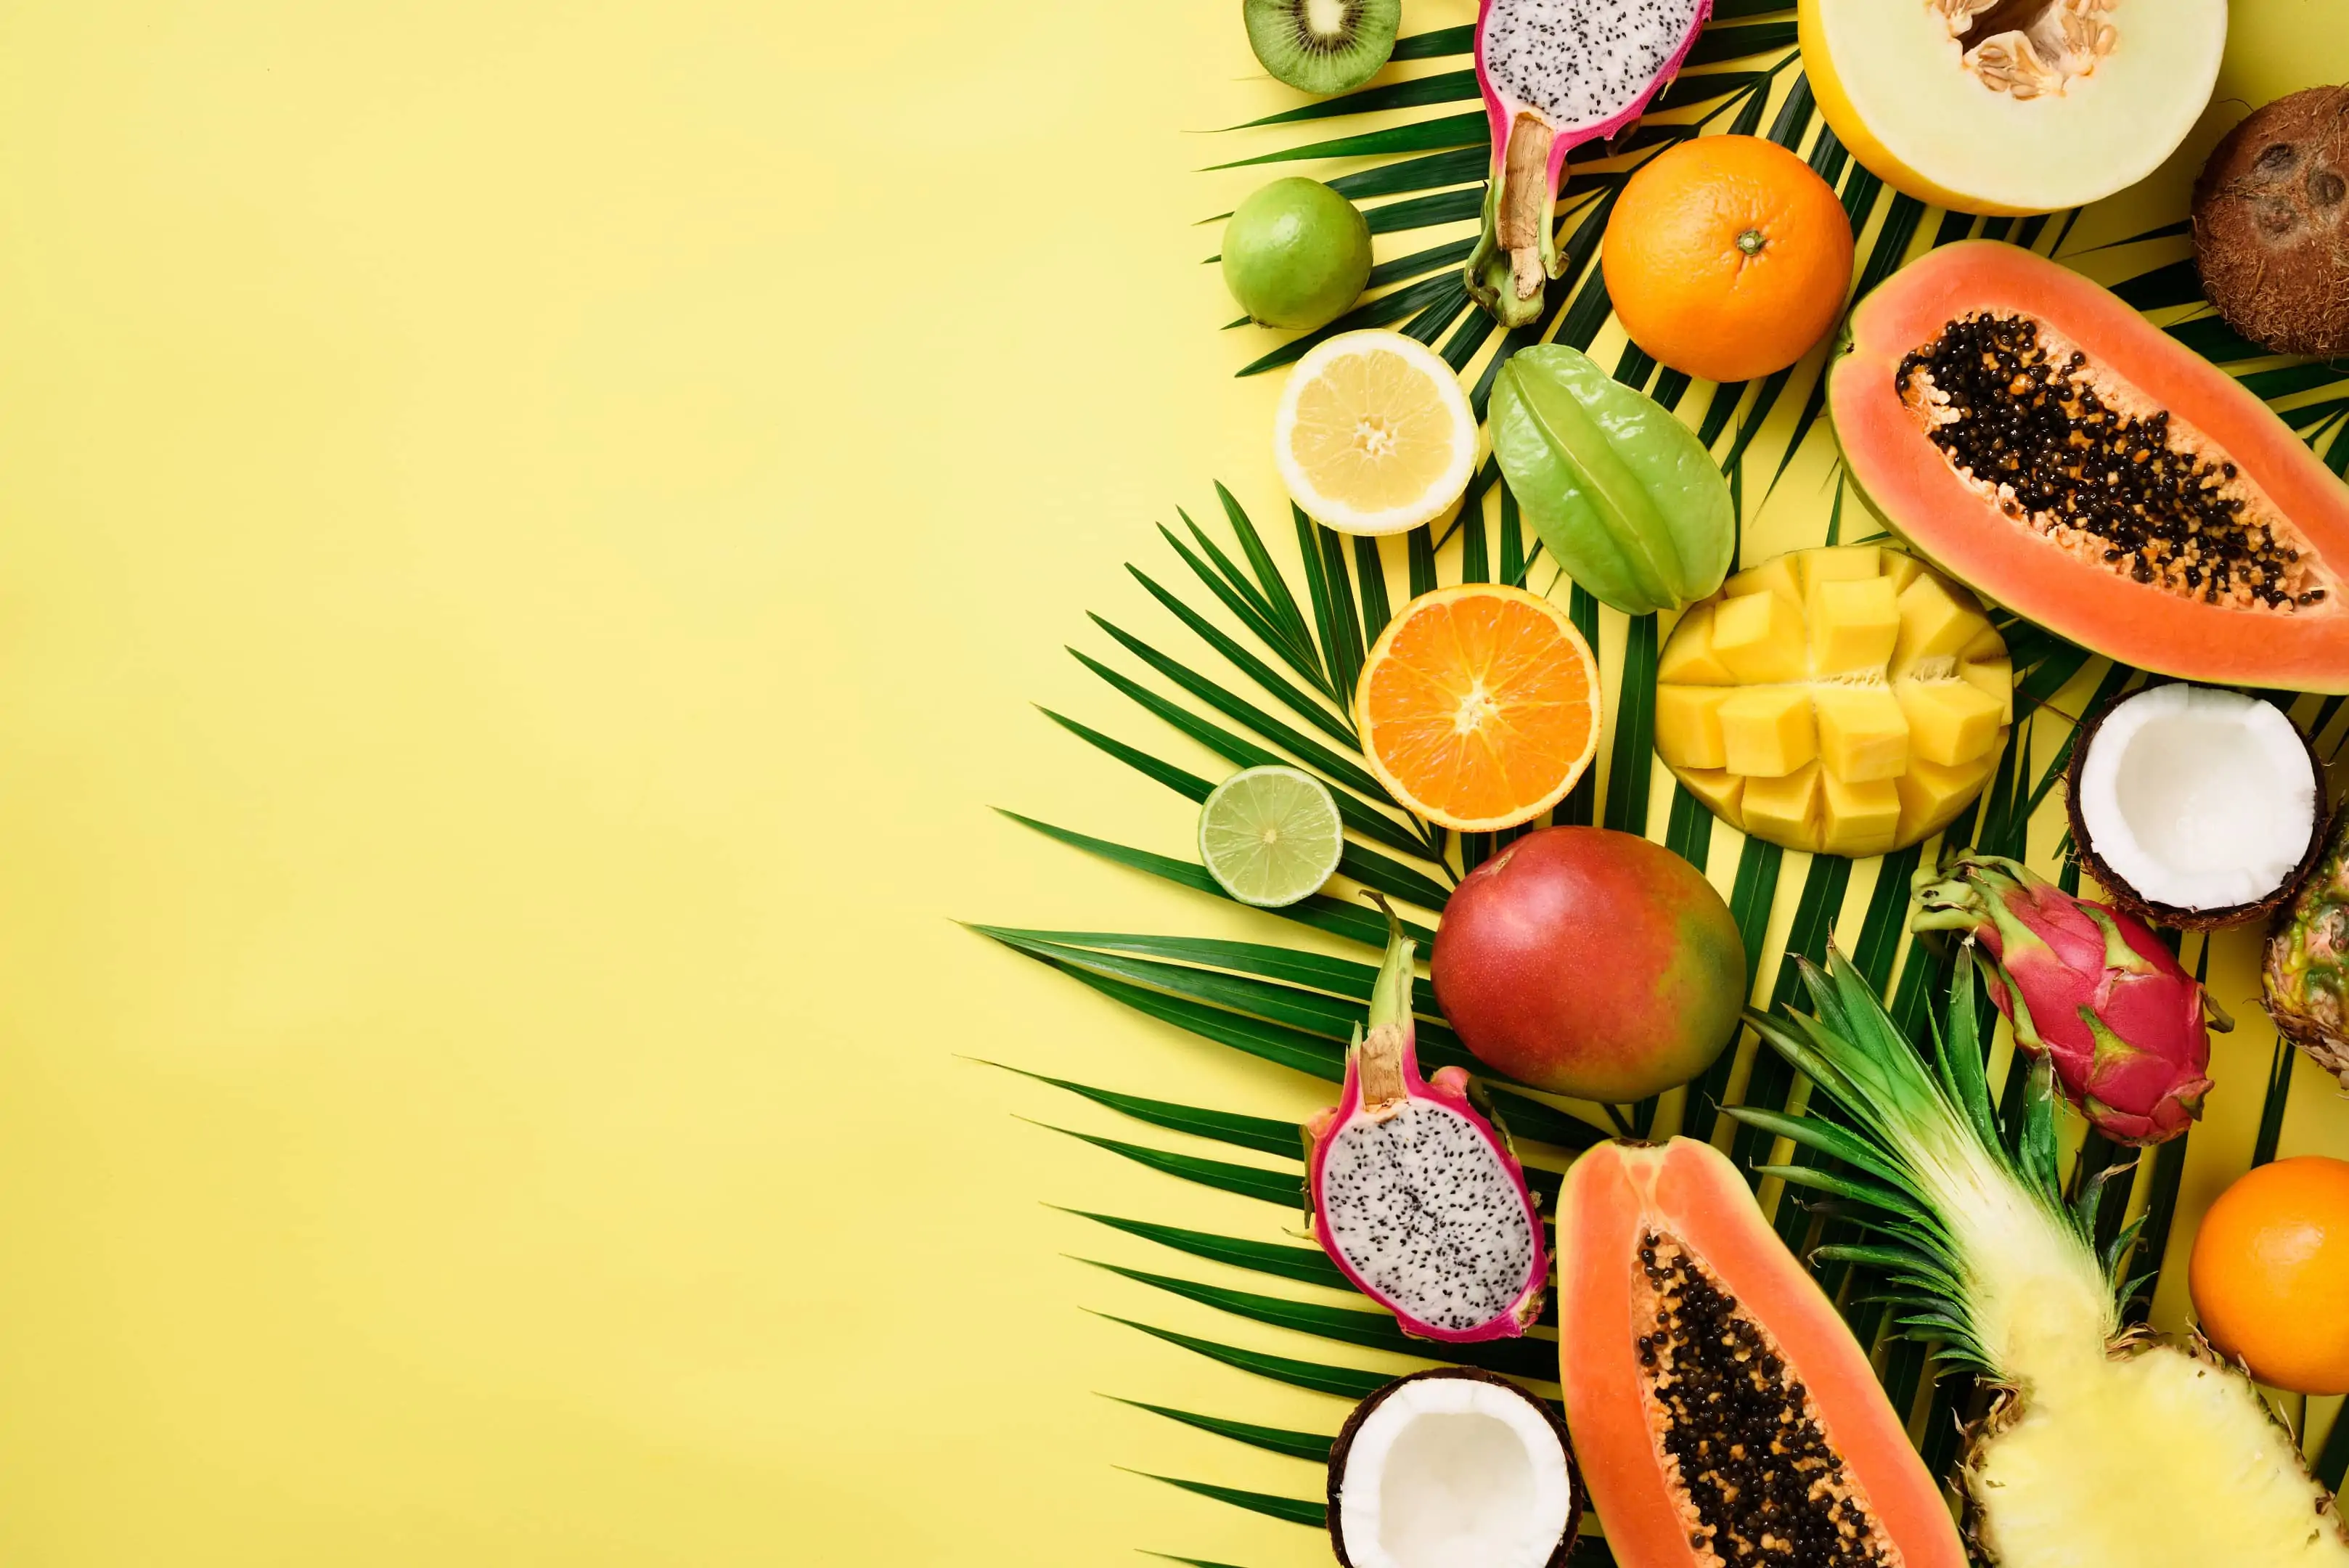 Tropical fruits — papaya, mango, pineapple, carambola, dragon fruit, kiwi, lemon, orange, melon, coconut and lime